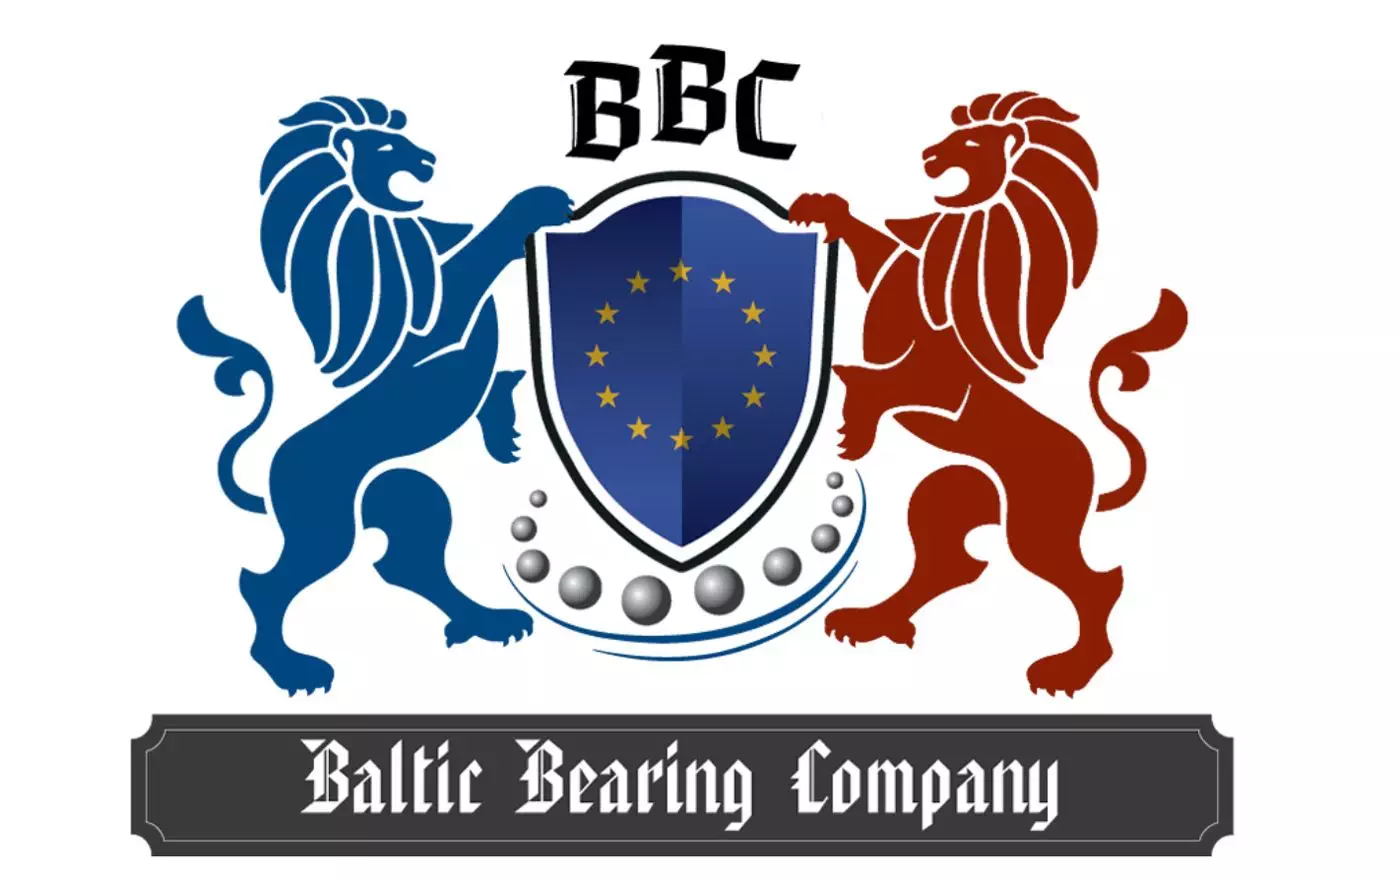 Baltic Bearing Company logo